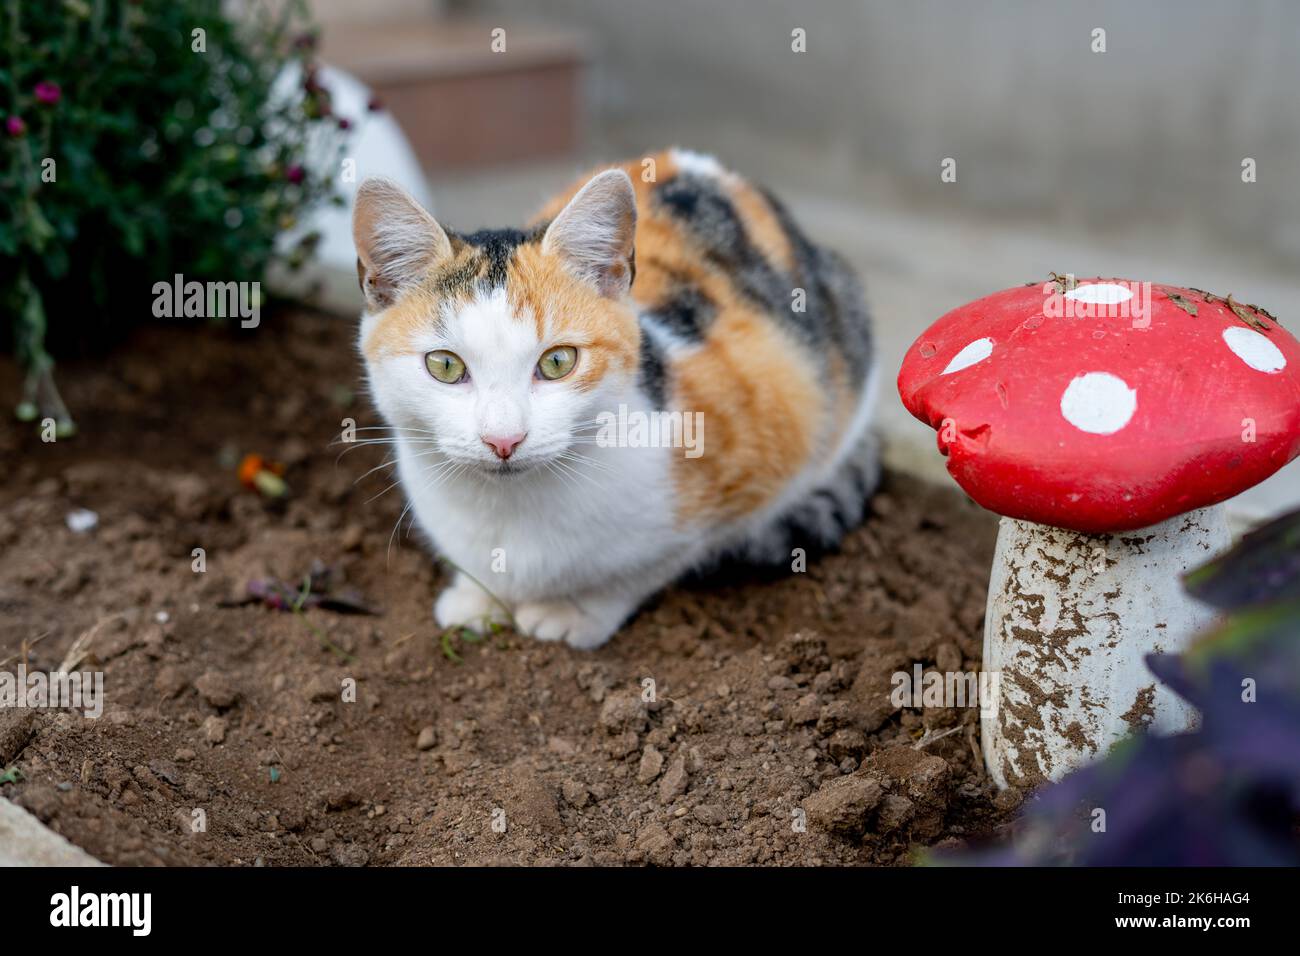 A beautiful cat sitting in the garden next to a decorative ceramic mushroom Stock Photo